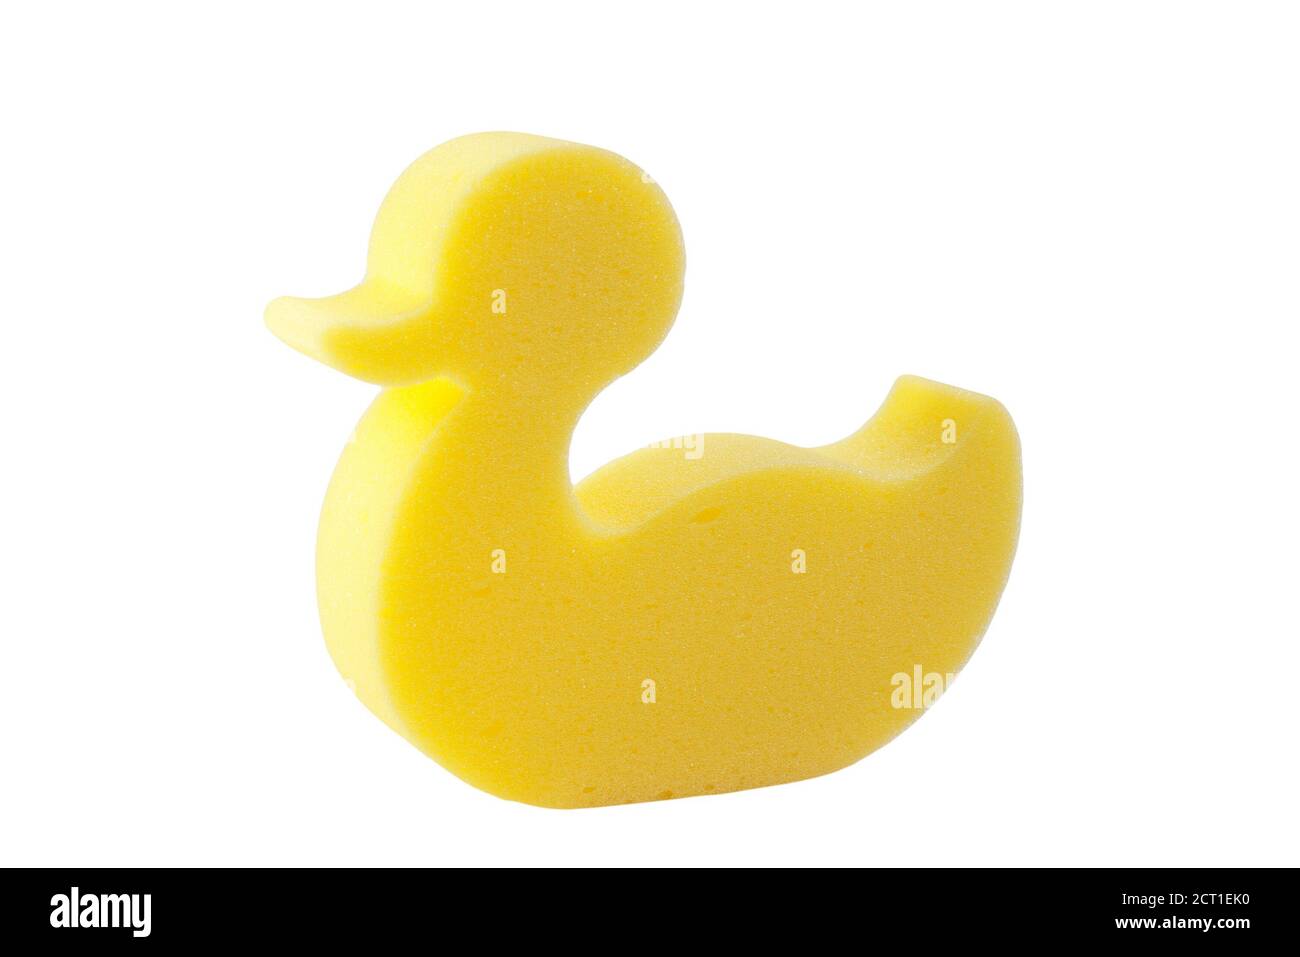 Yellow duck sponge against white background Stock Photo